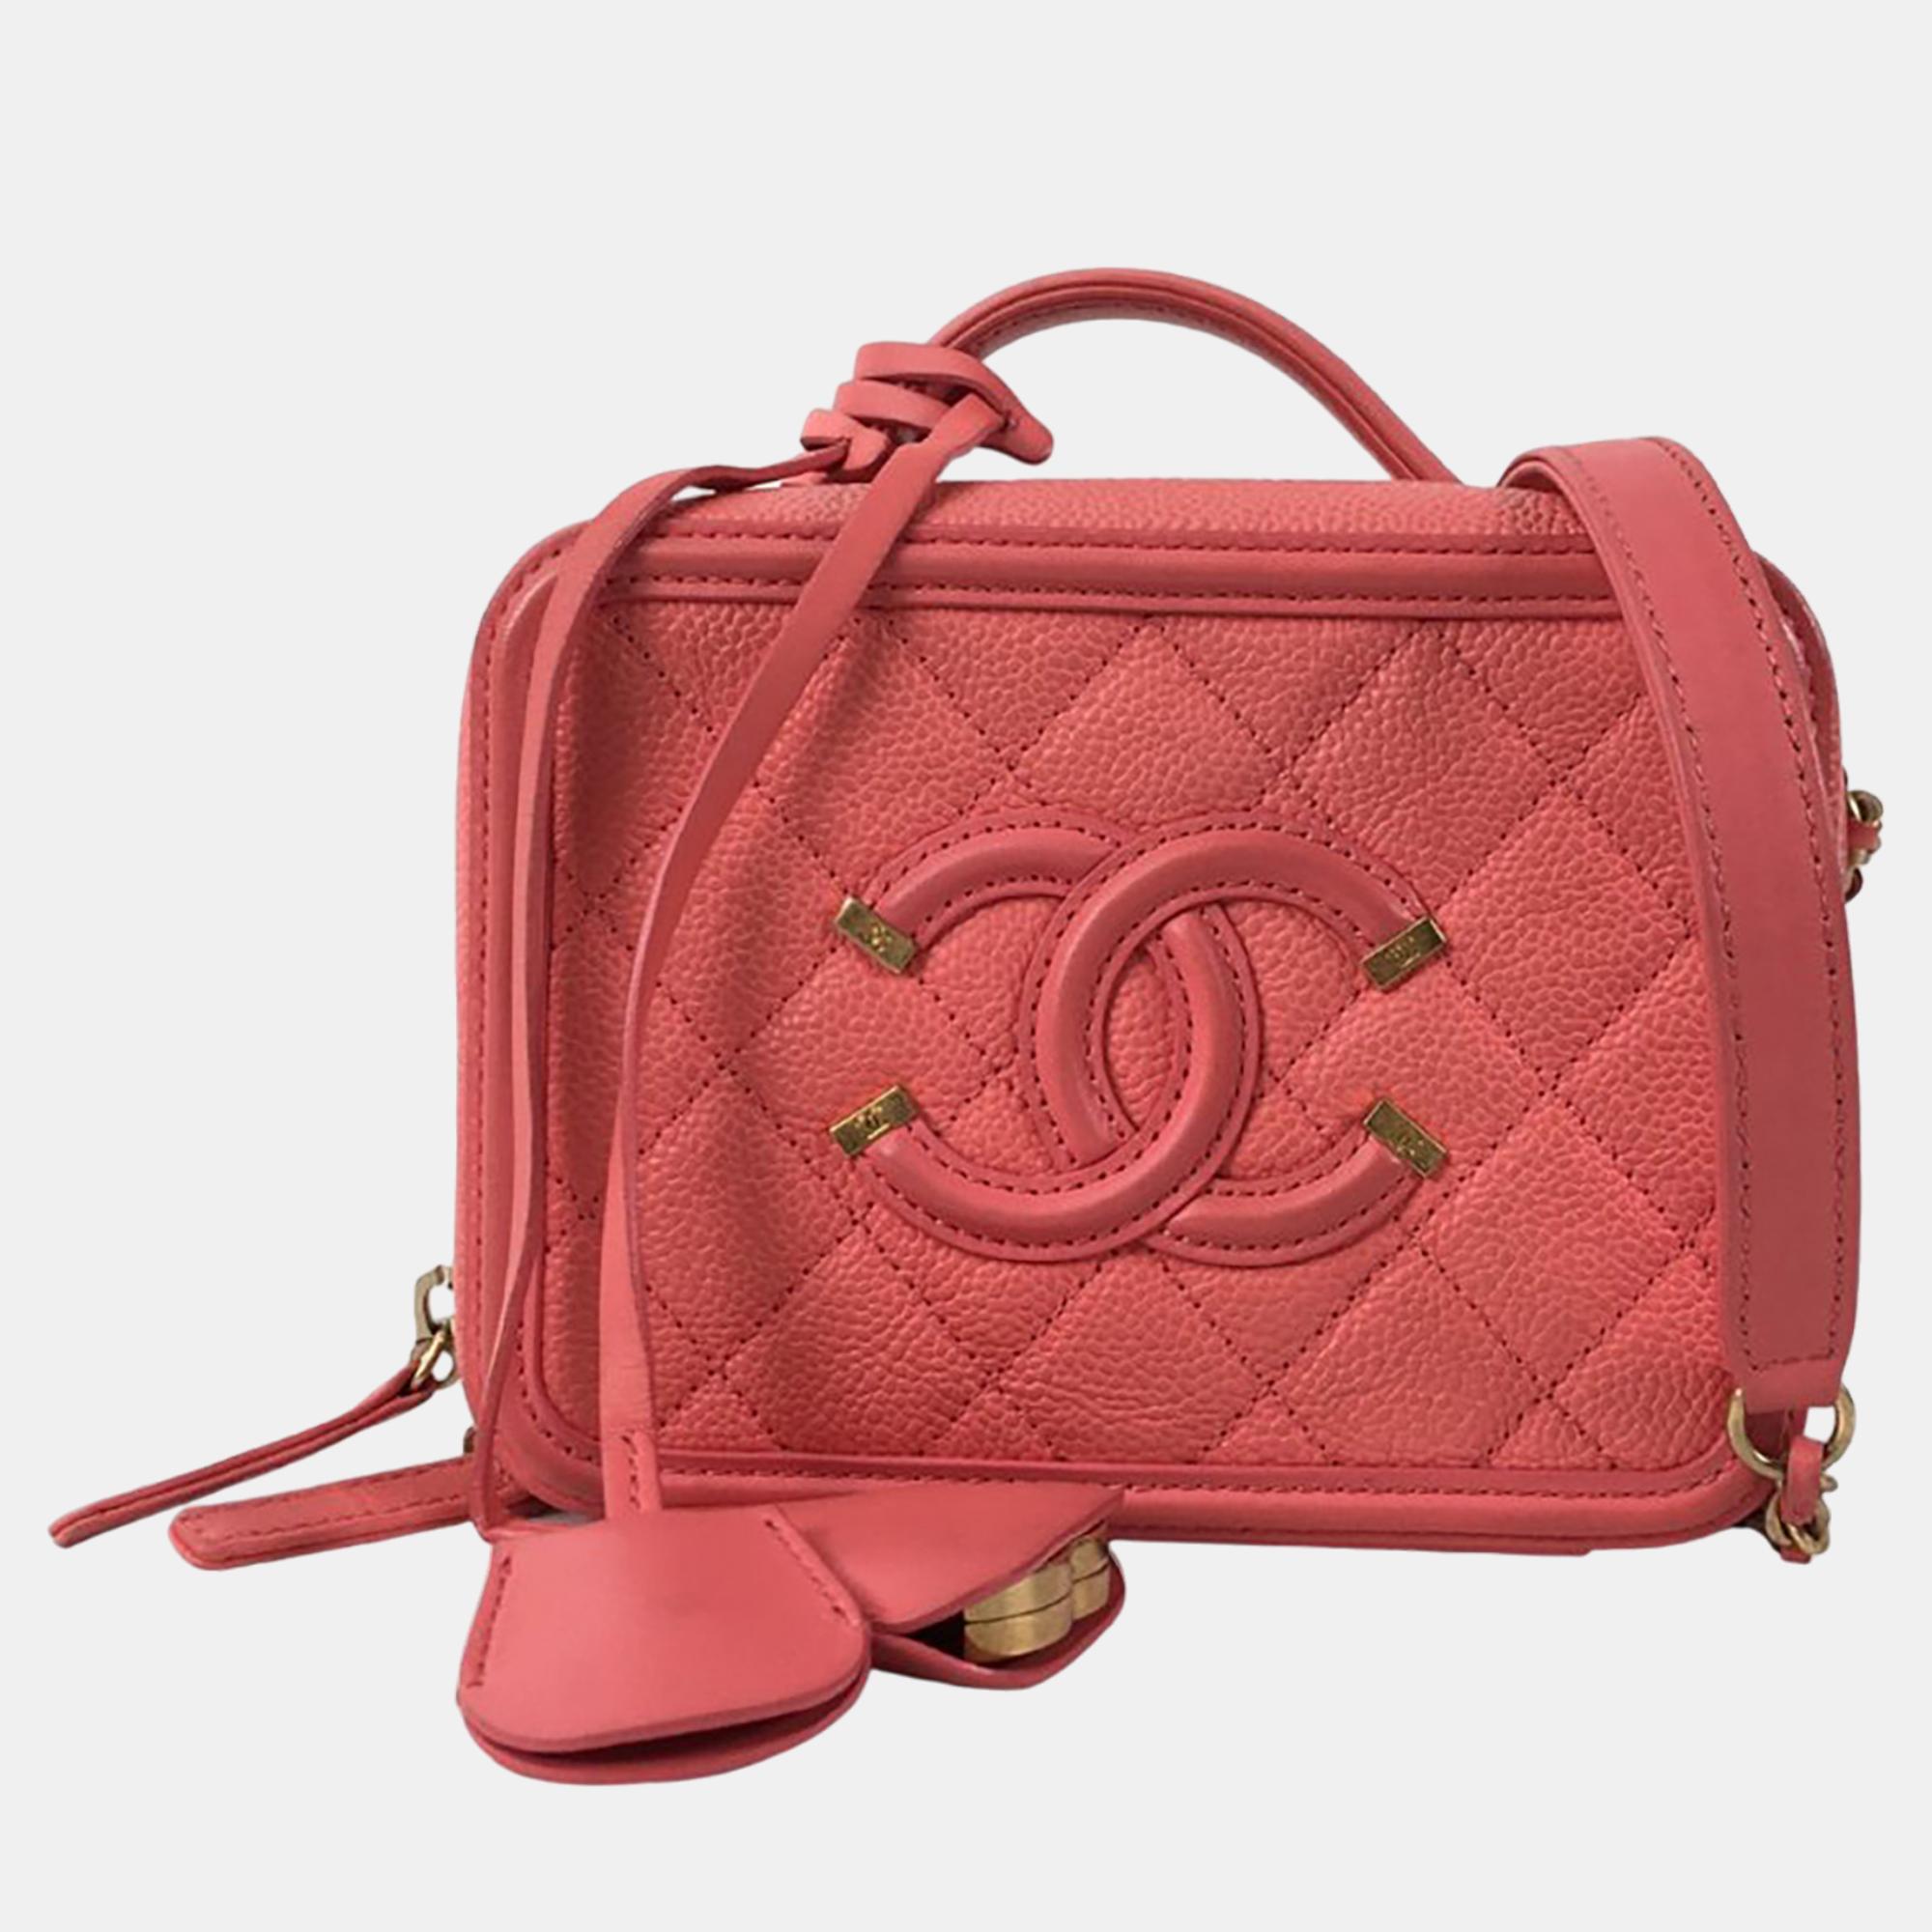 Chanel pink small caviar cc filigree vanity bag